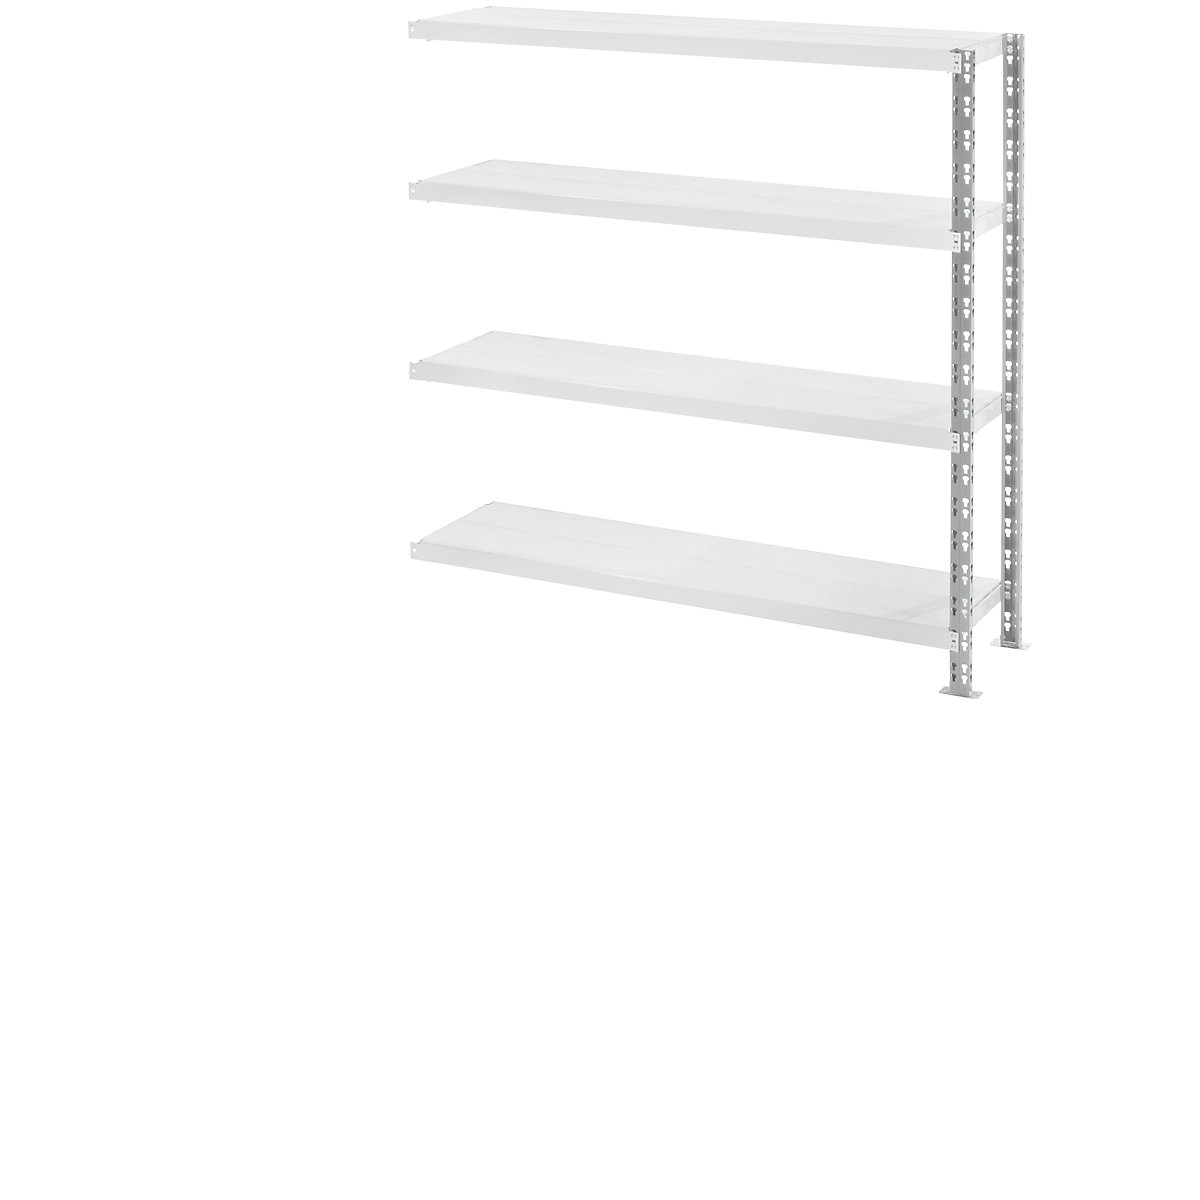 Wide span shelf unit with sheet steel shelves, depth 500 mm, extension shelf unit, HxW 1508 x 1525 mm